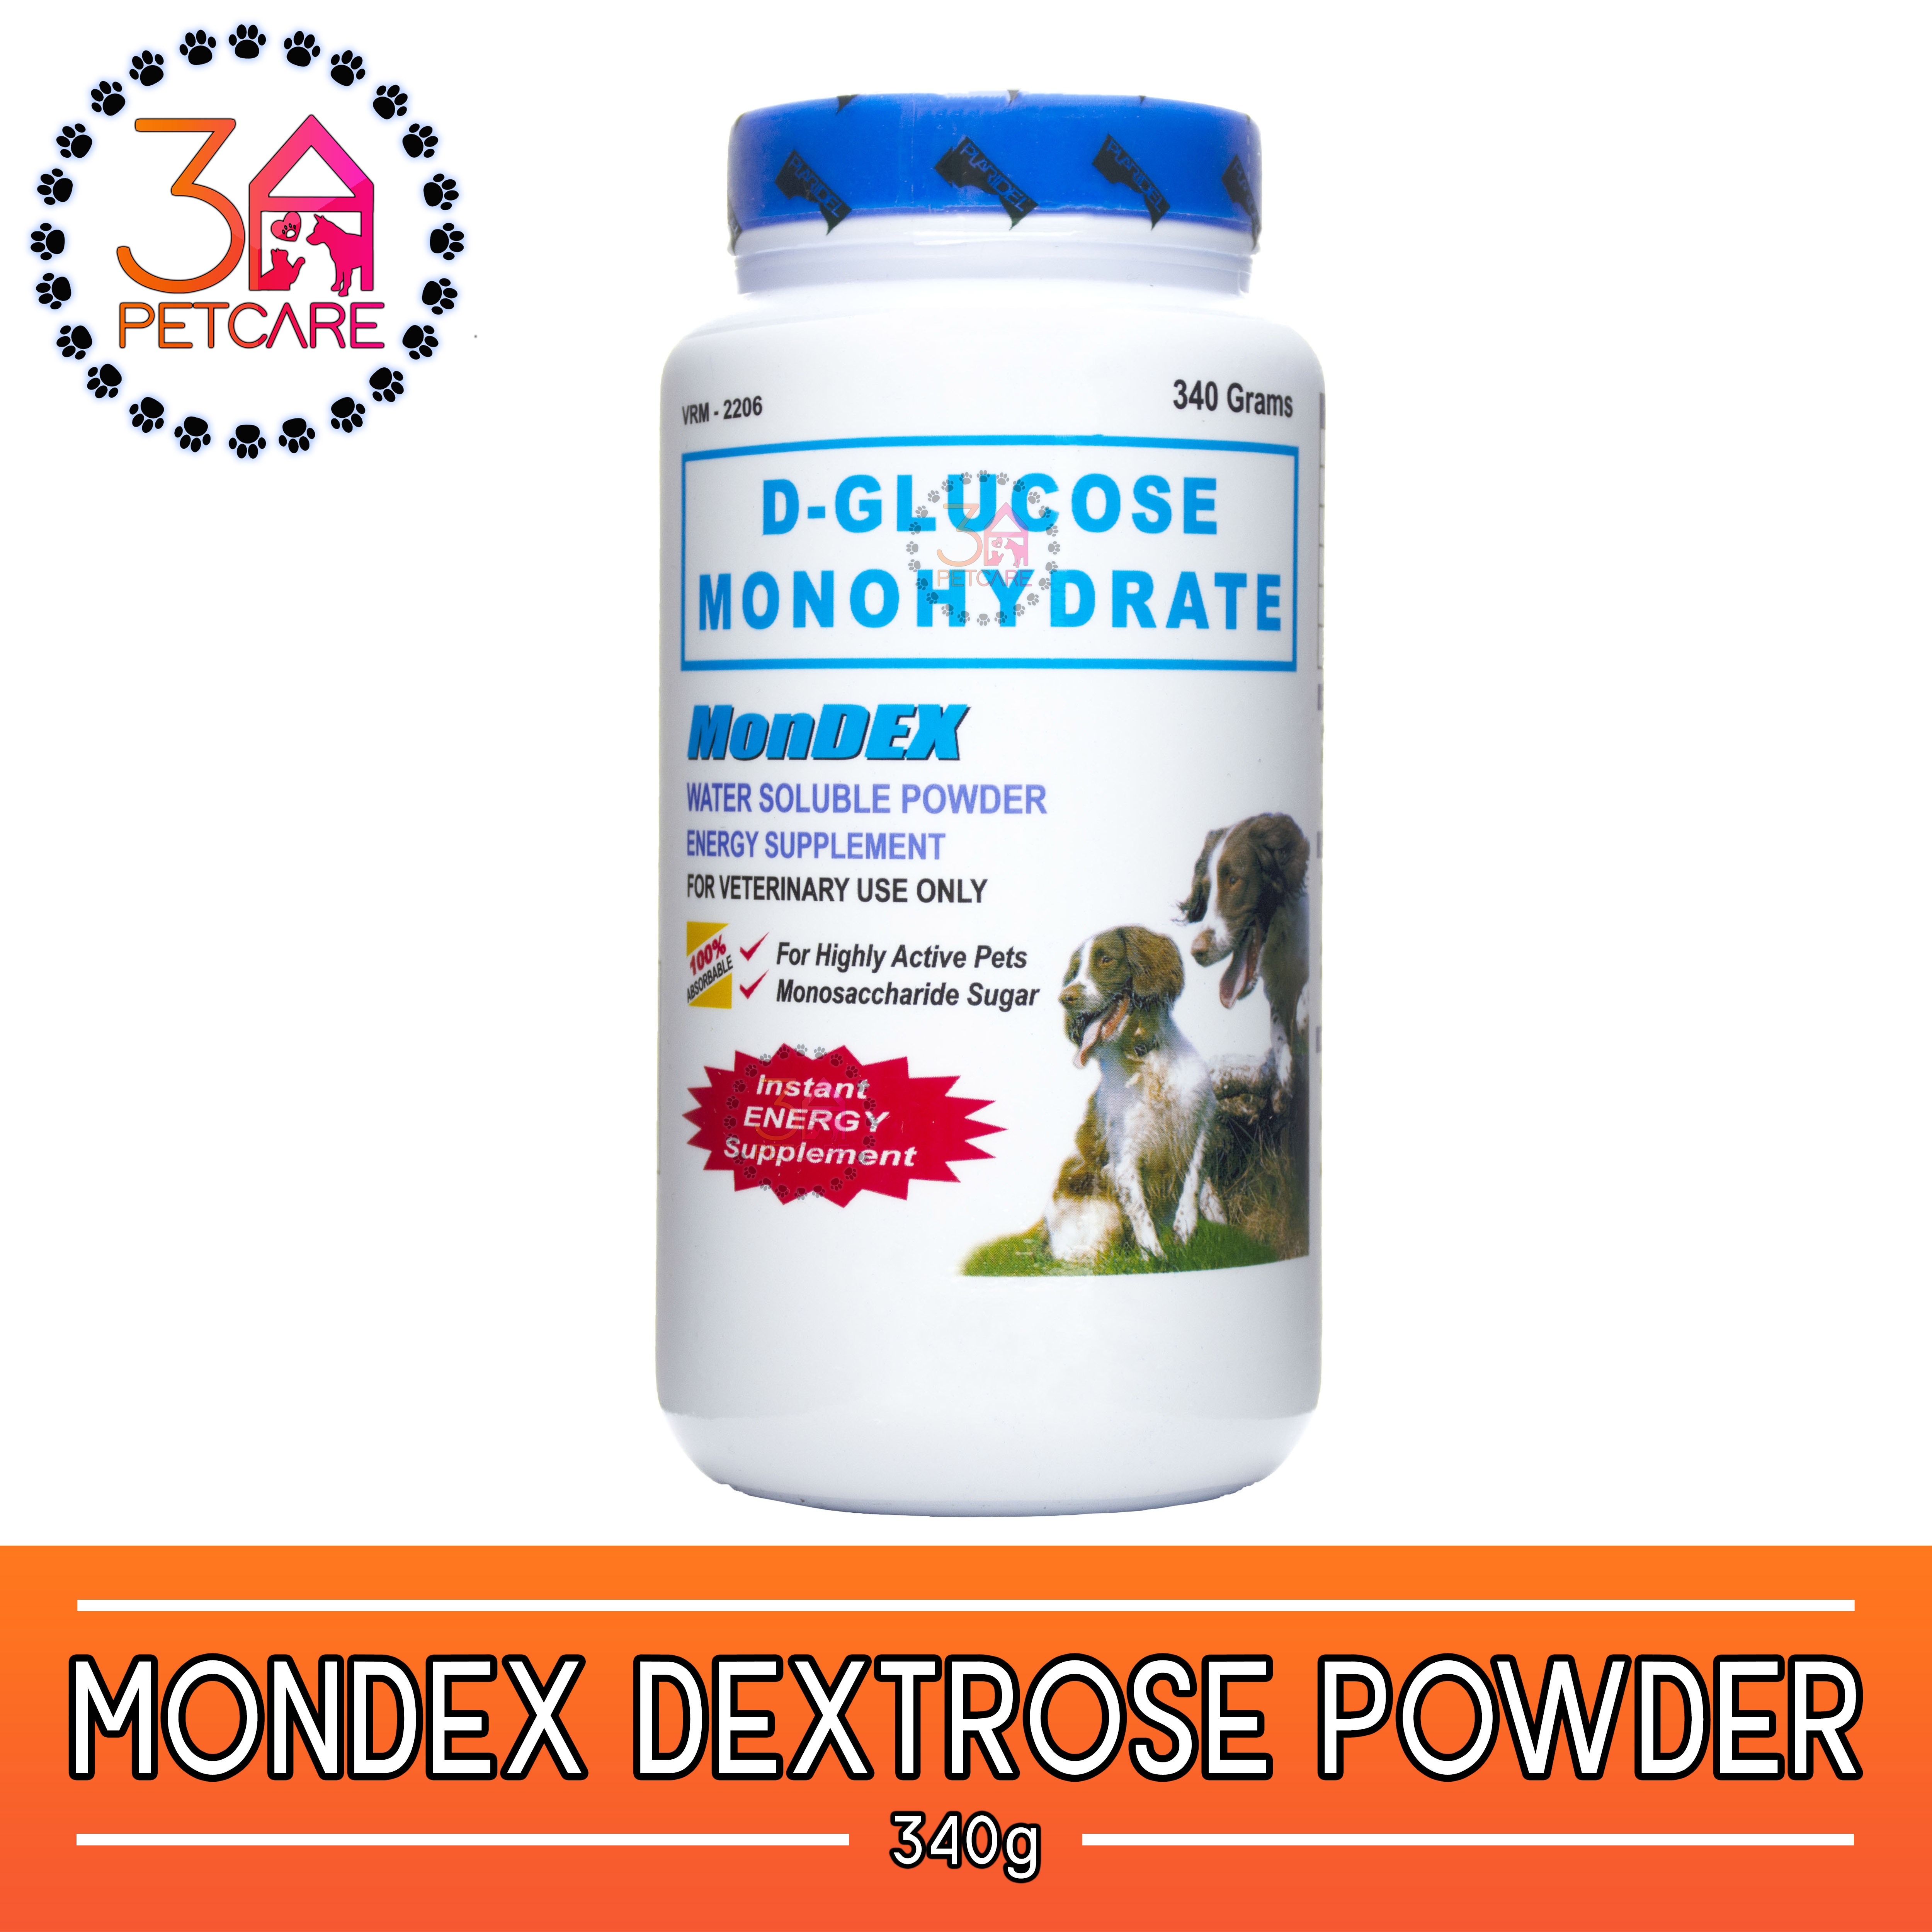 dextrose powder for dogs